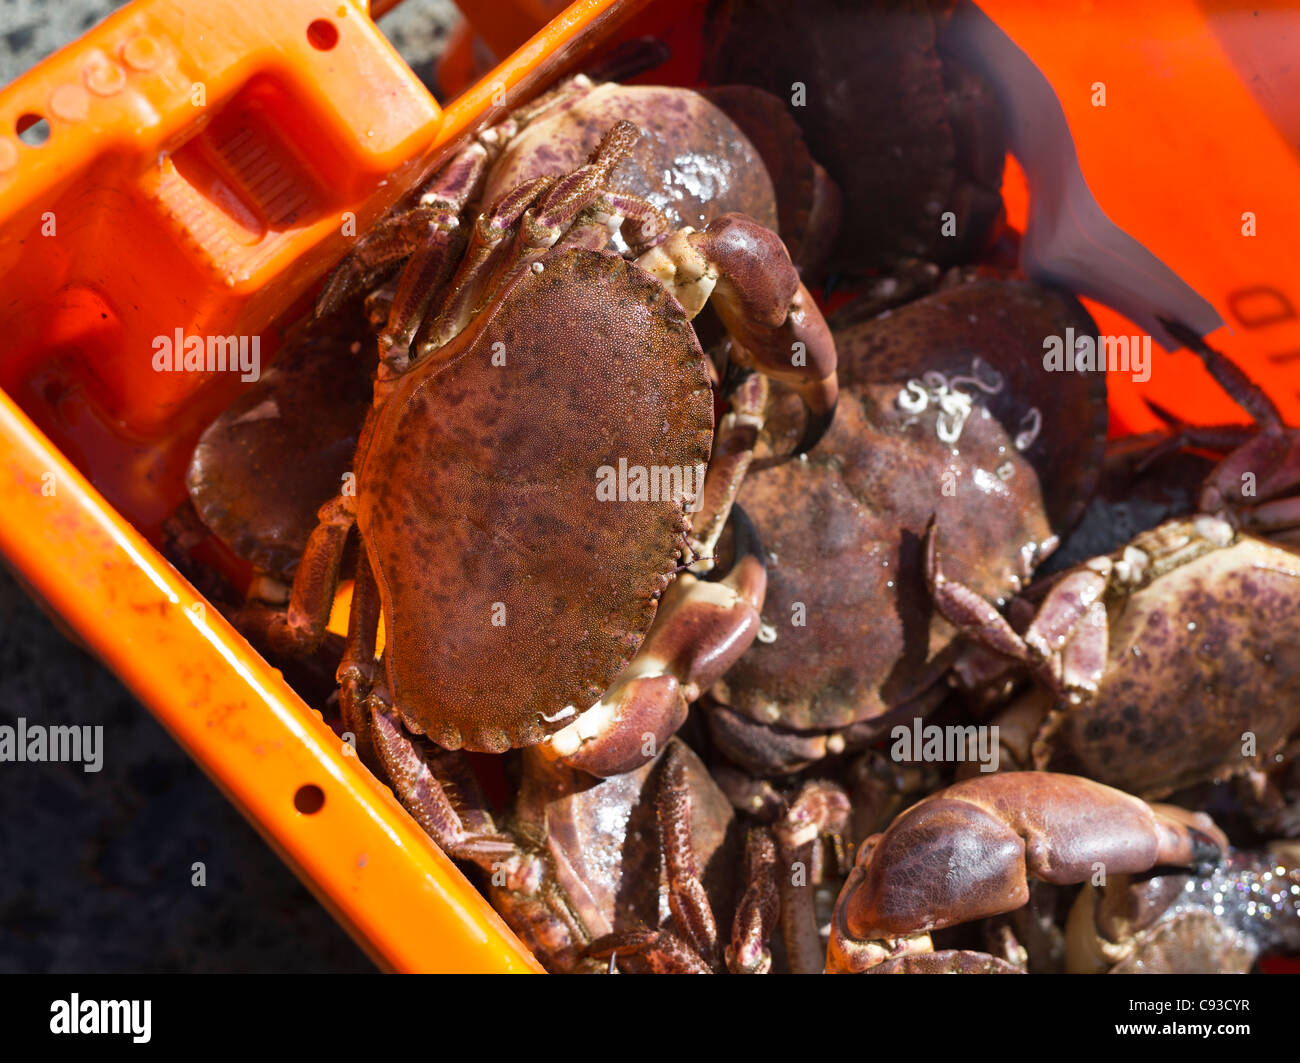 https://c8.alamy.com/comp/C93CYR/dh-crab-fishing-fish-box-of-crabs-edible-crab-cancer-pagurus-brown-C93CYR.jpg